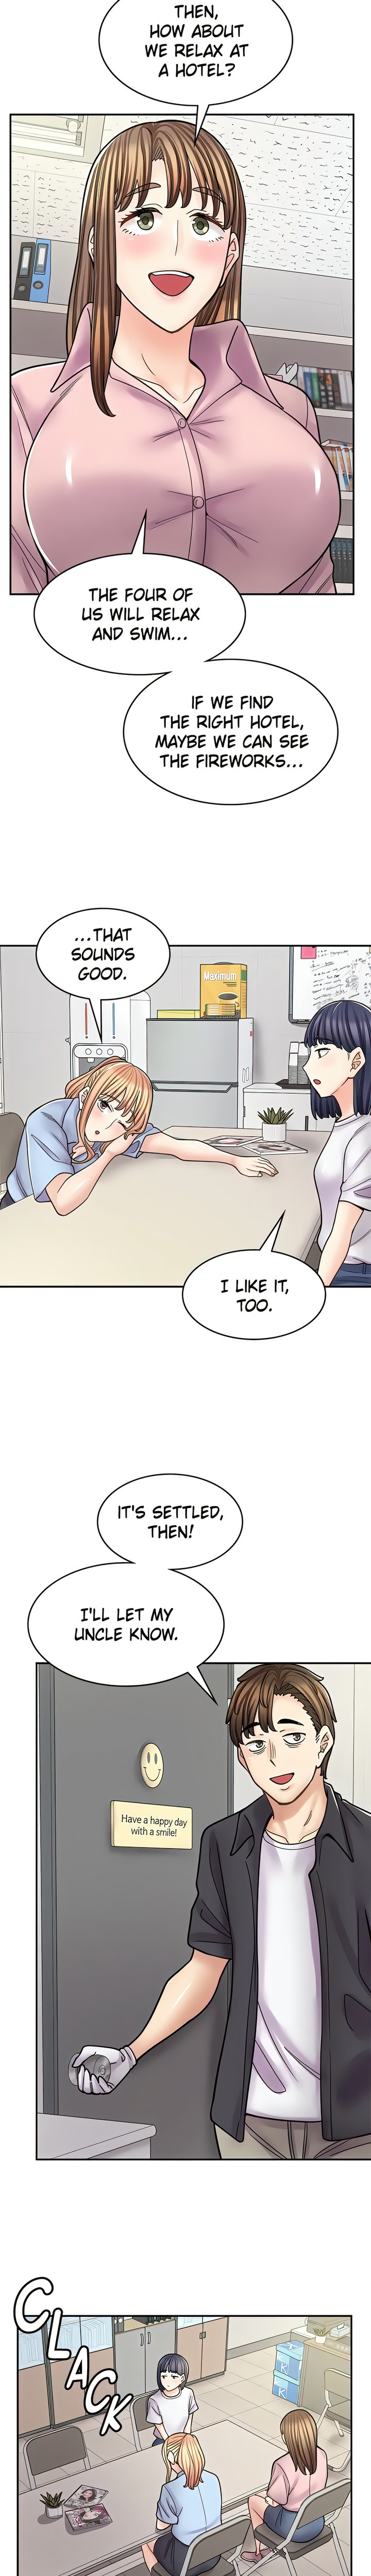 Erotic Manga Café Girls - Chapter 52 Page 12